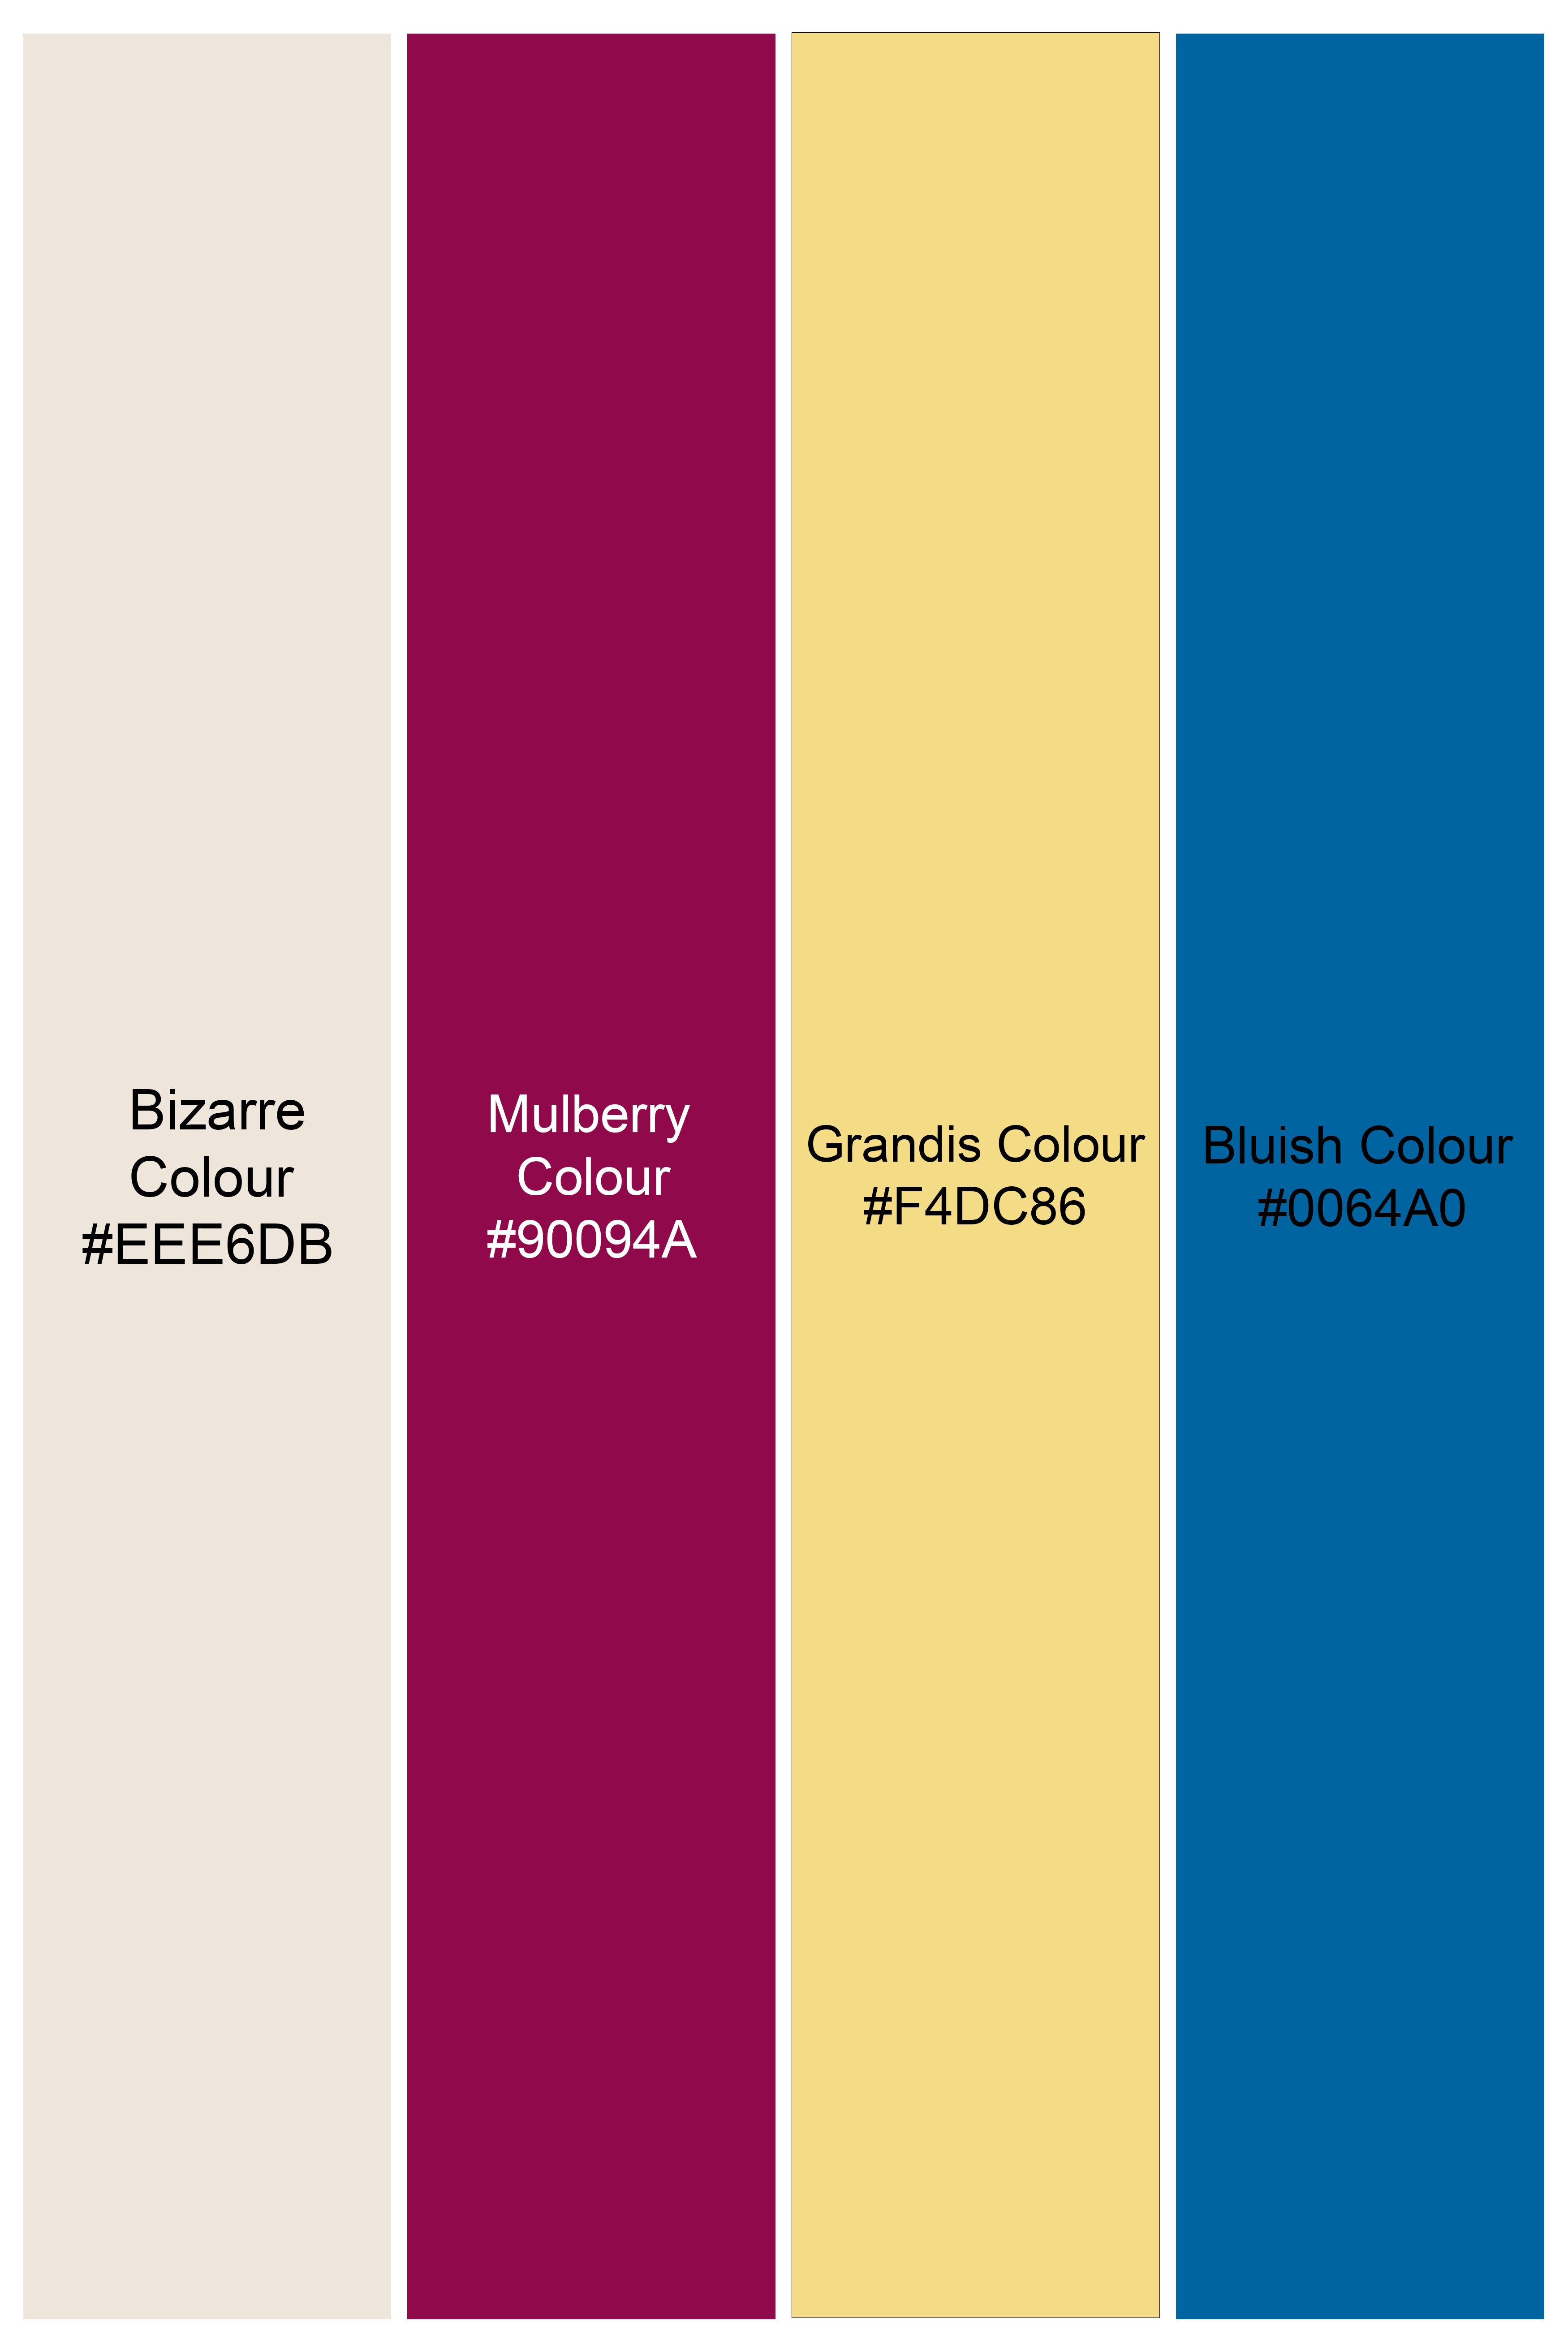 Bizarre Cream with Multicolor Floral Printed Super Soft Premium Cotton Shirt